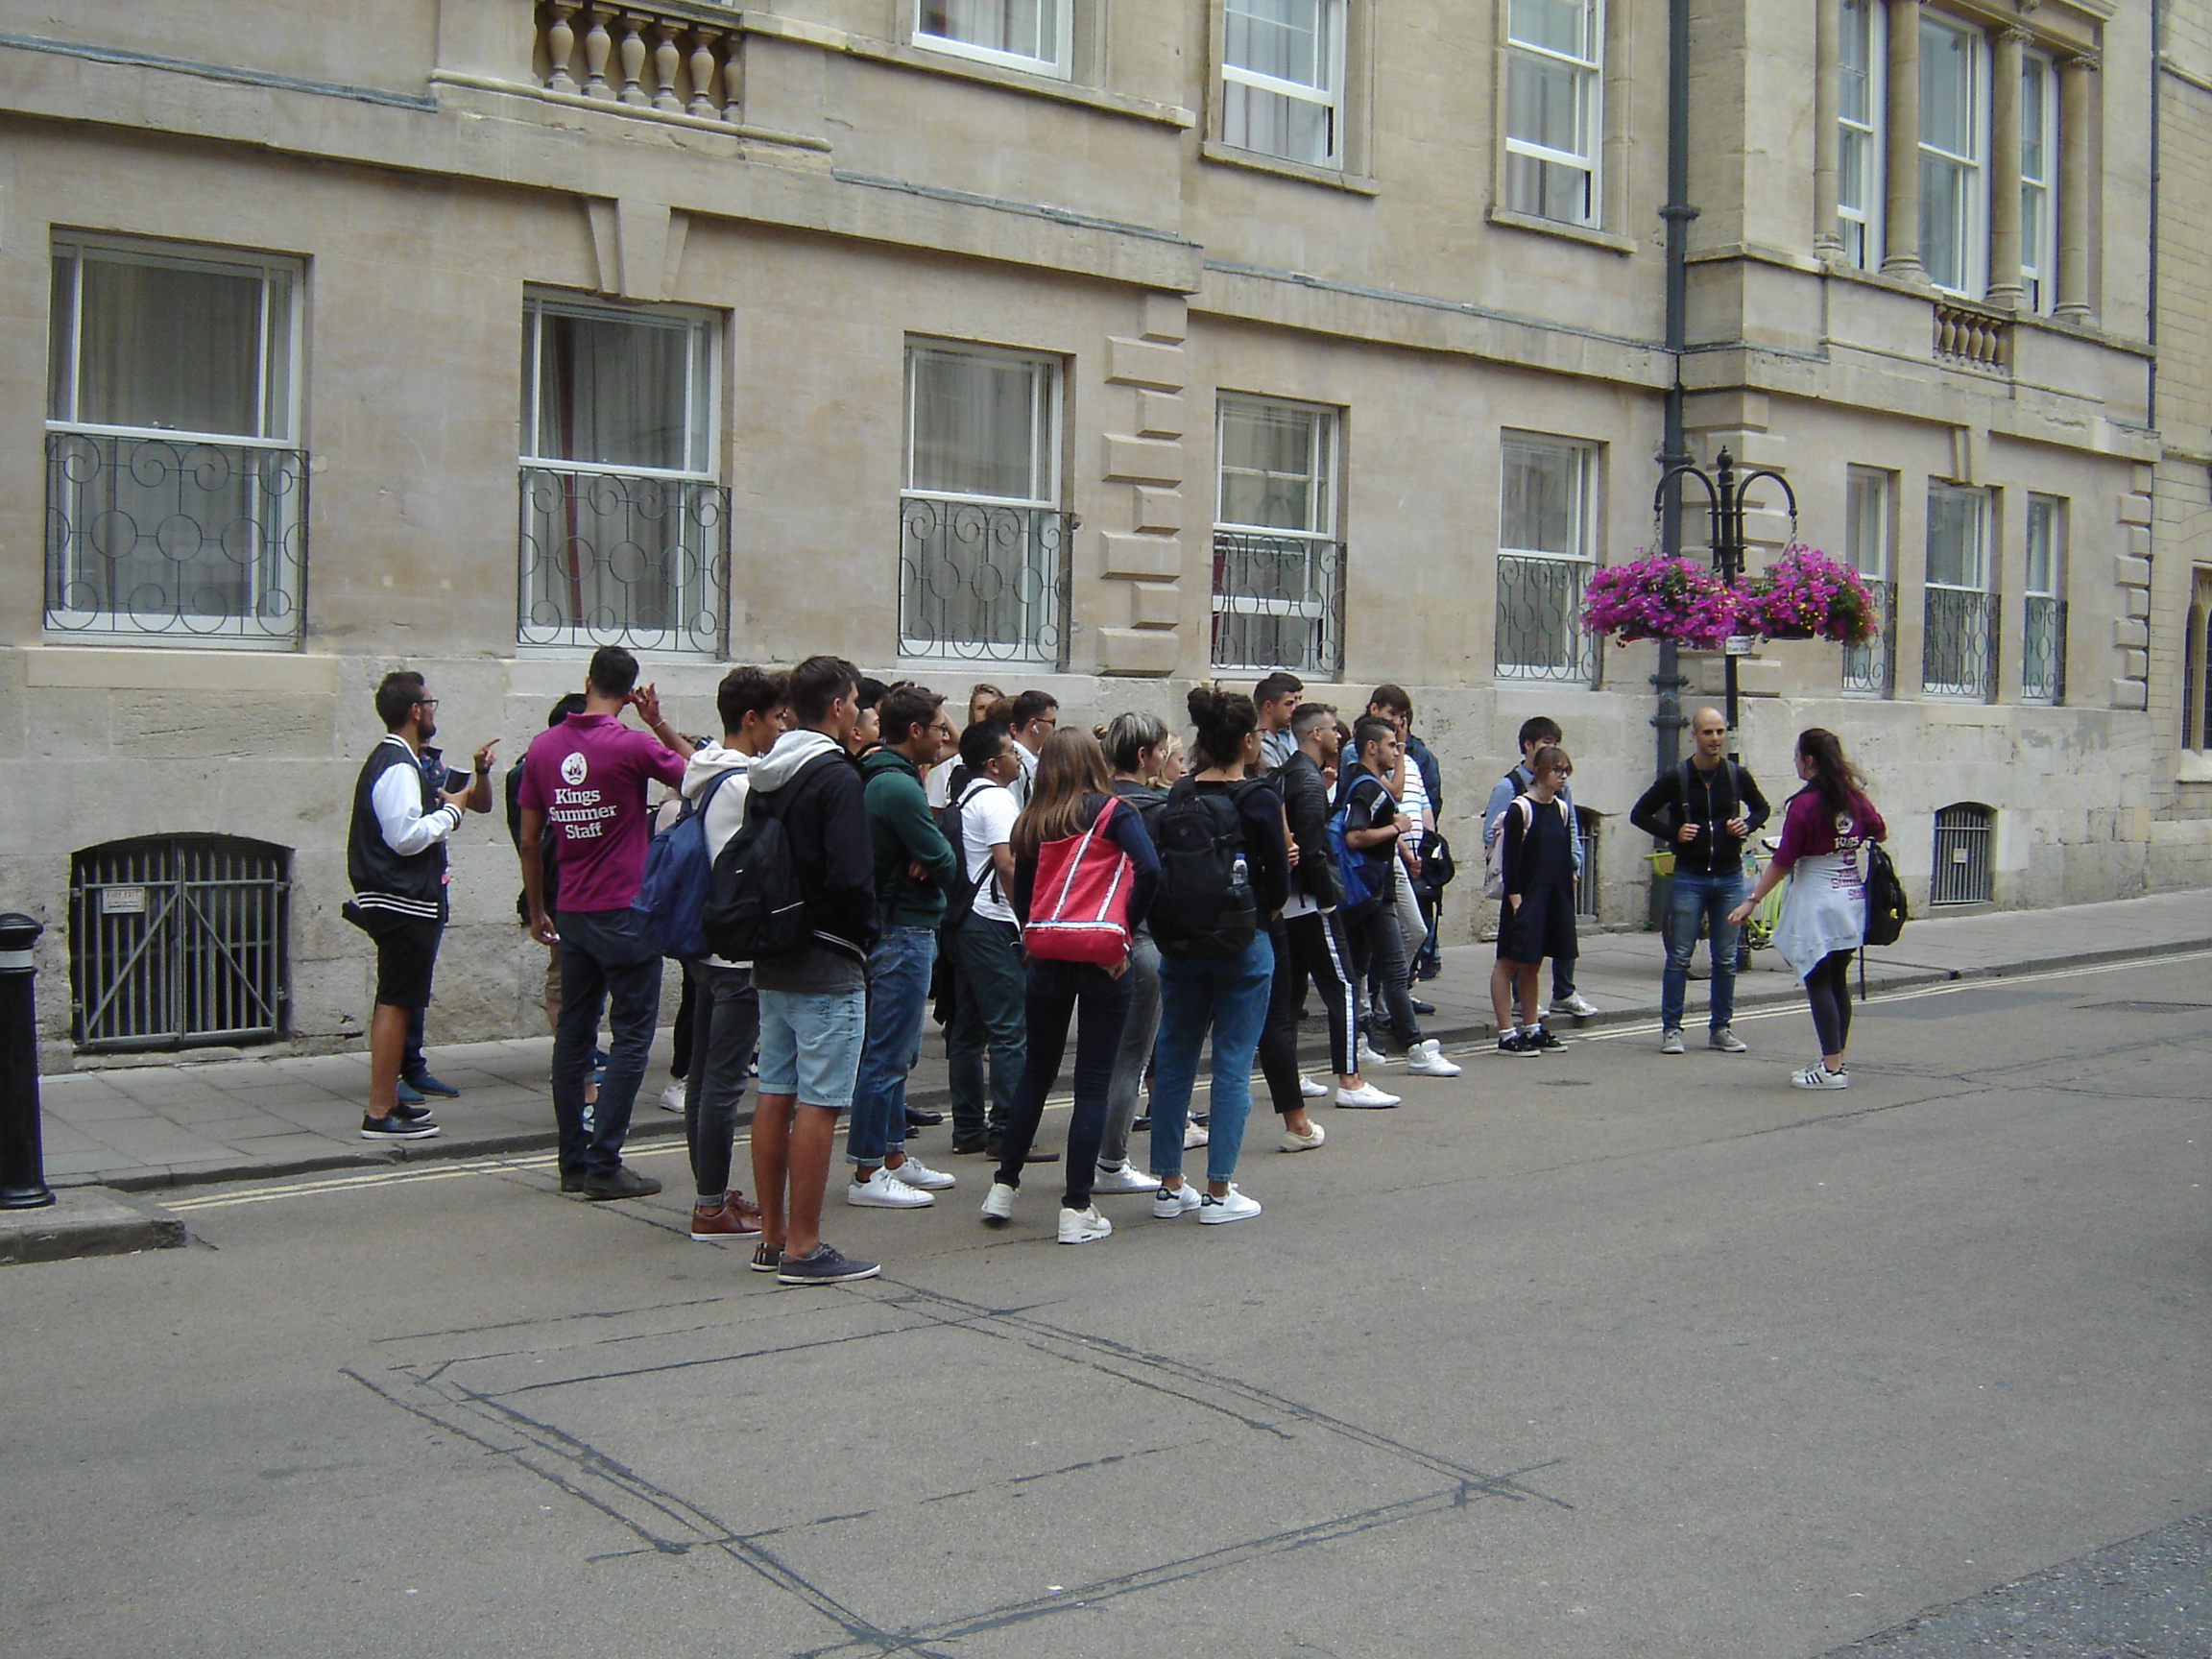 Drab people in Broad Street, Oxford